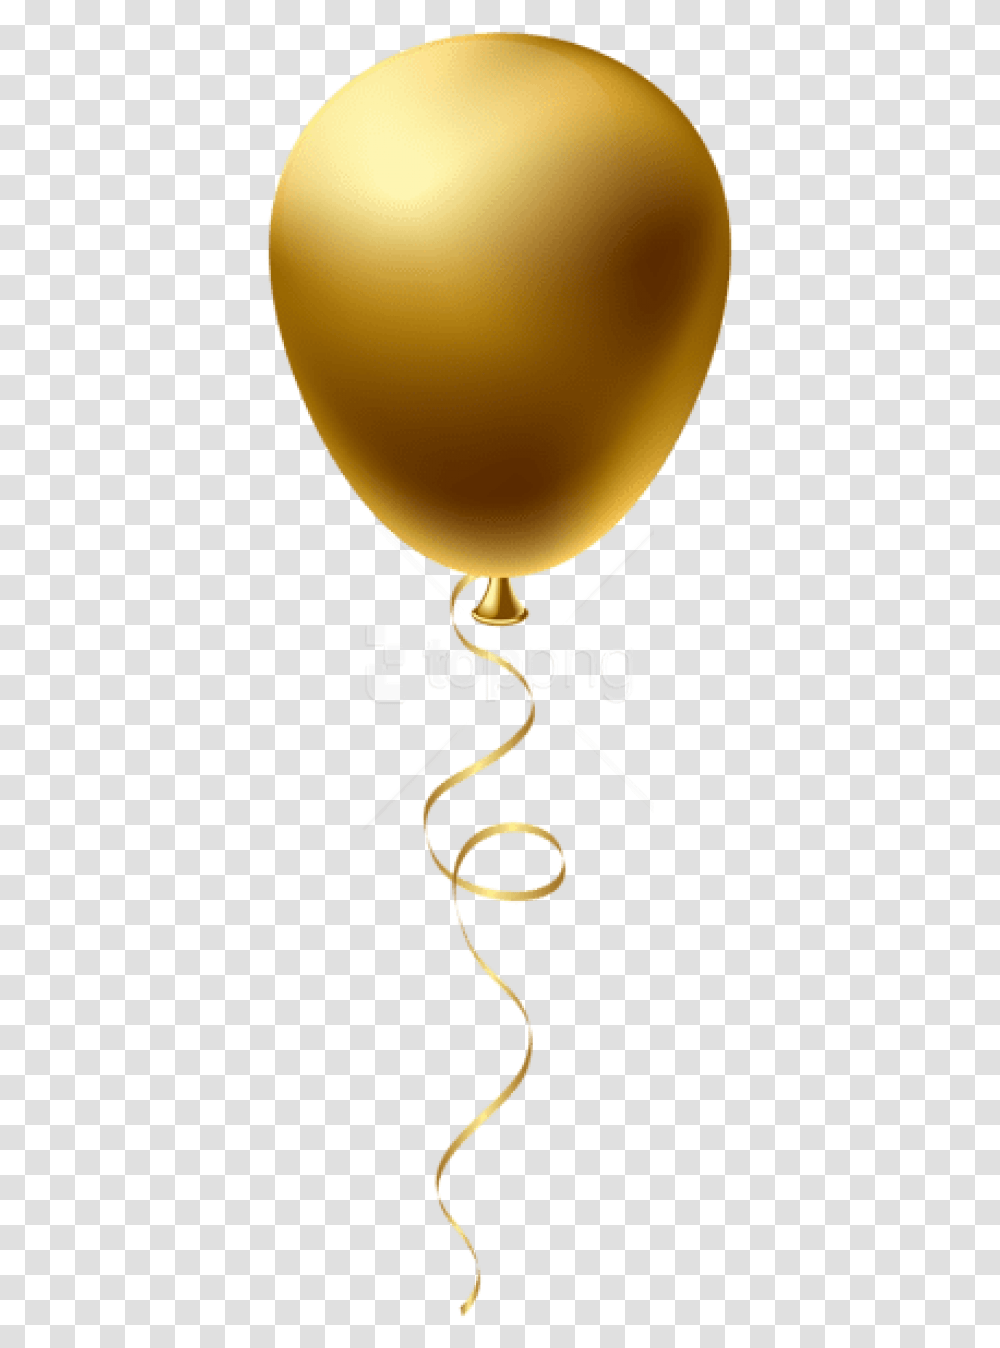 Balloonyellowclip Artillustrationparty Supplysmile Gold Balloons Clip Art, Lamp, Beverage, Drink, Sphere Transparent Png